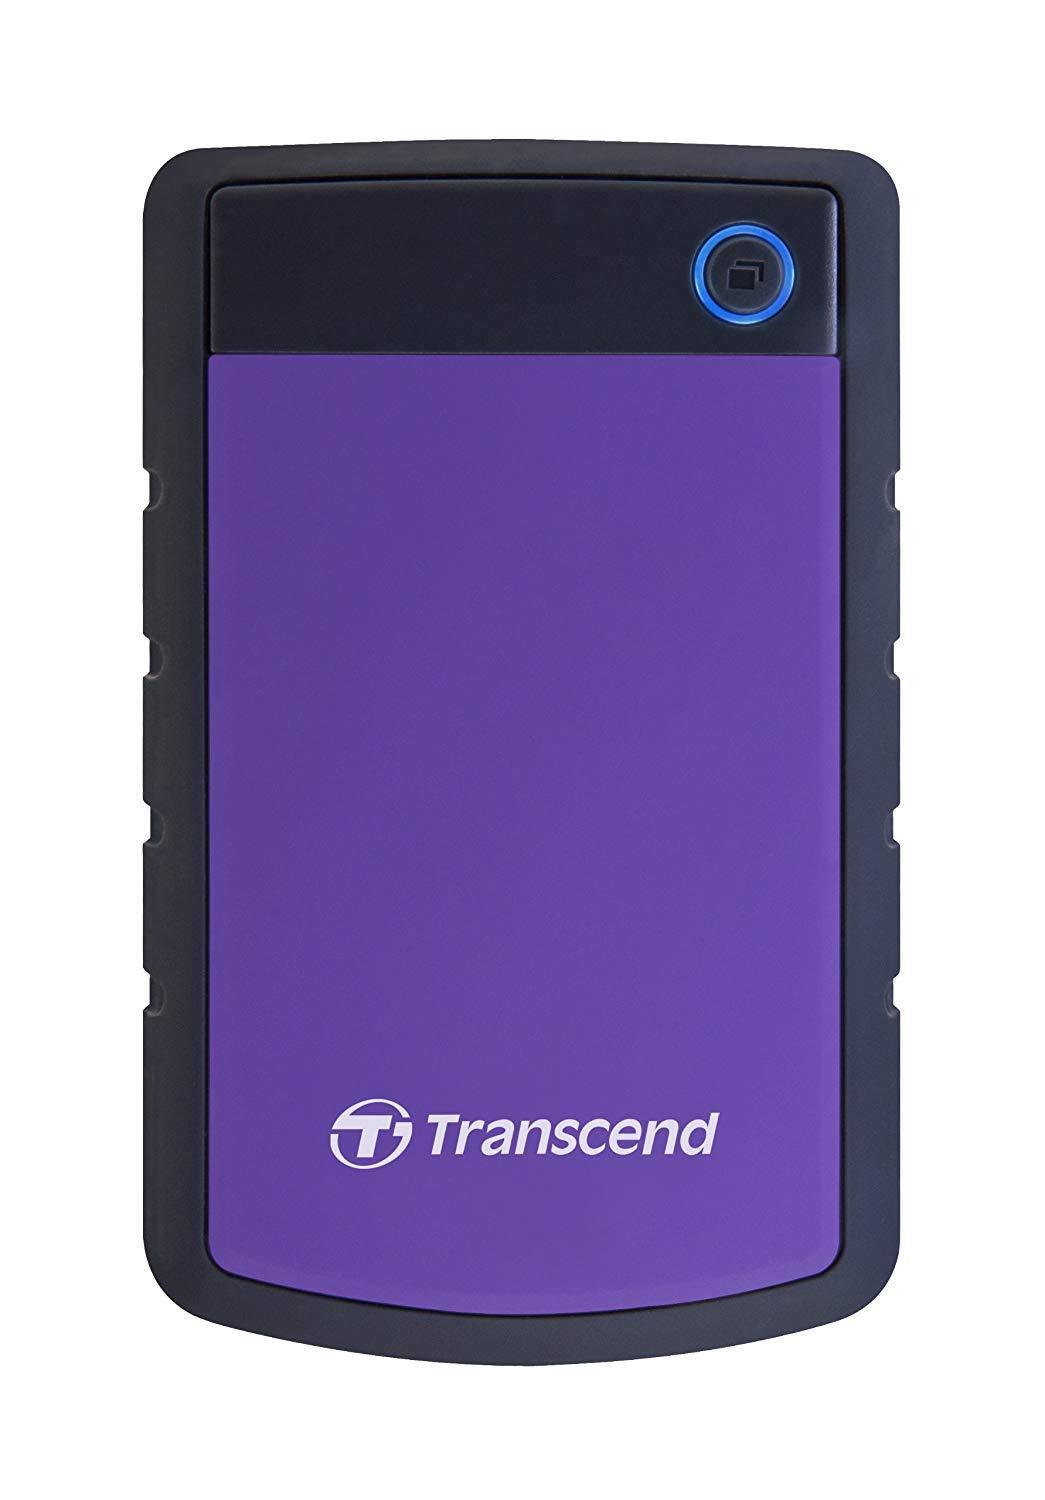 Transcend 4TB StoreJet 25H3 USB 3.1 Purple Hard Drive w/ Shock Protection